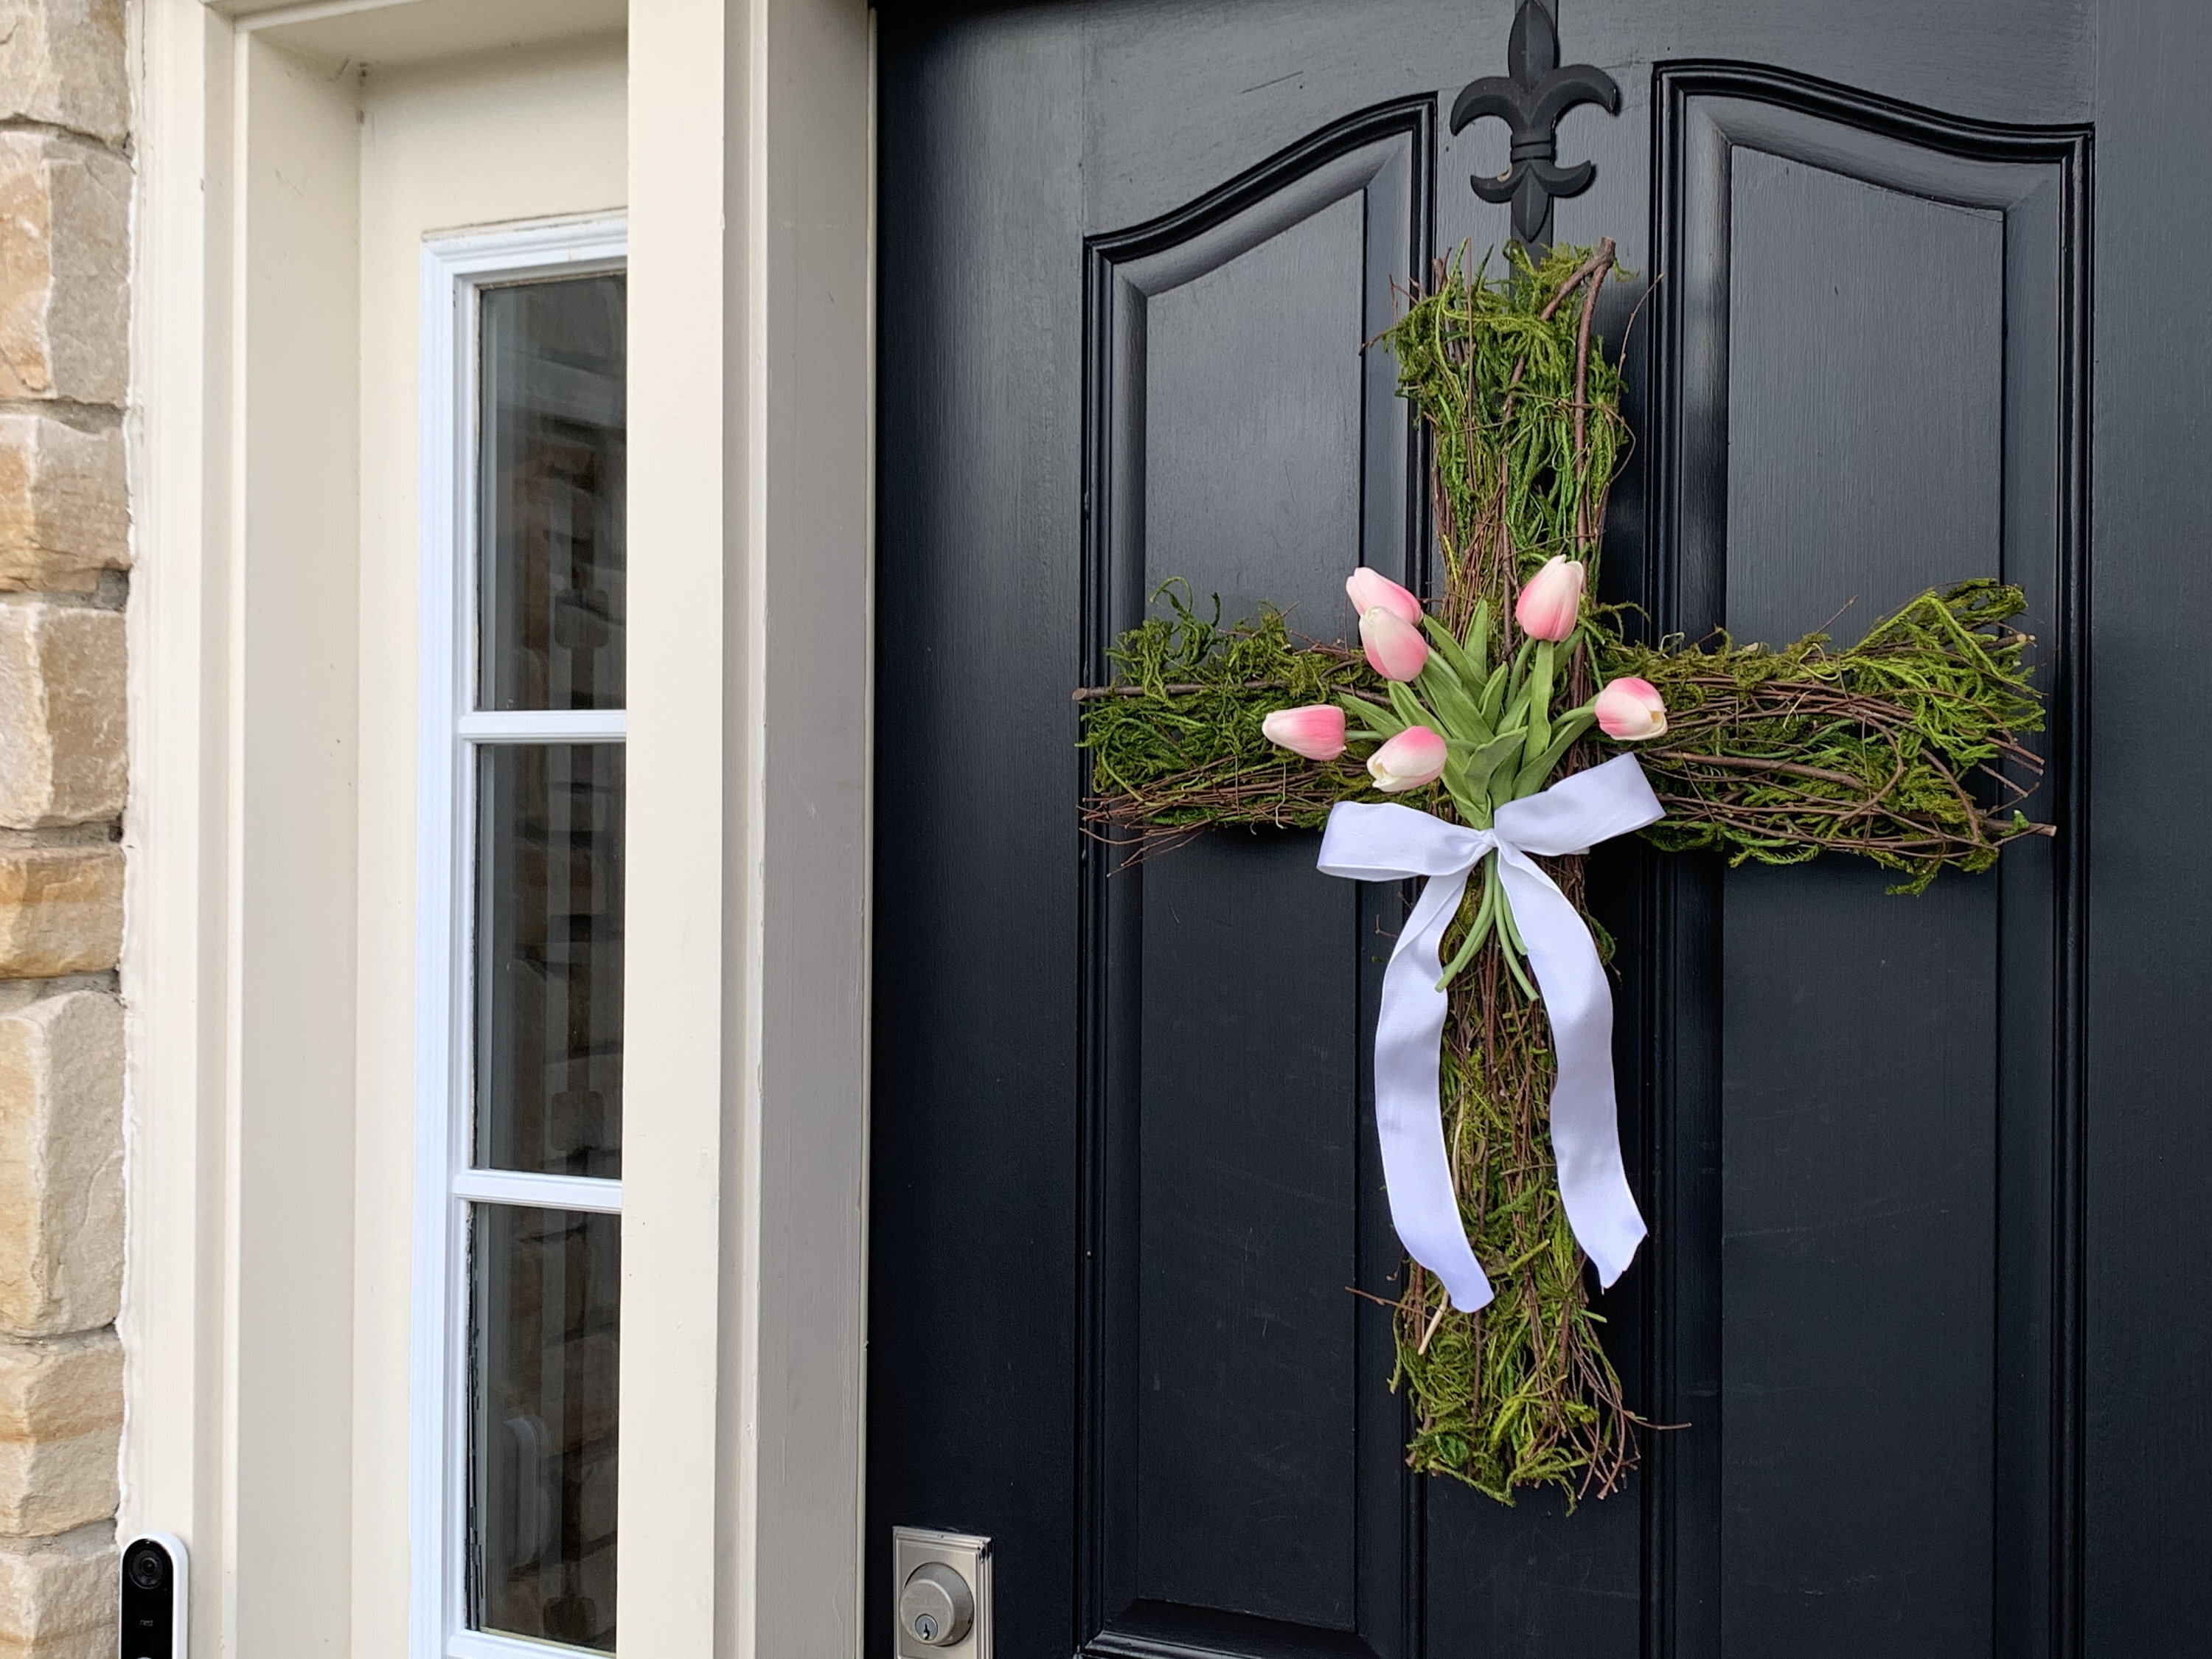 Easter Cross for Front Door, Cross Wreath, Easter Decor, Tulips for Easter, Easter Gifts for Mom, Retirement Home Decor